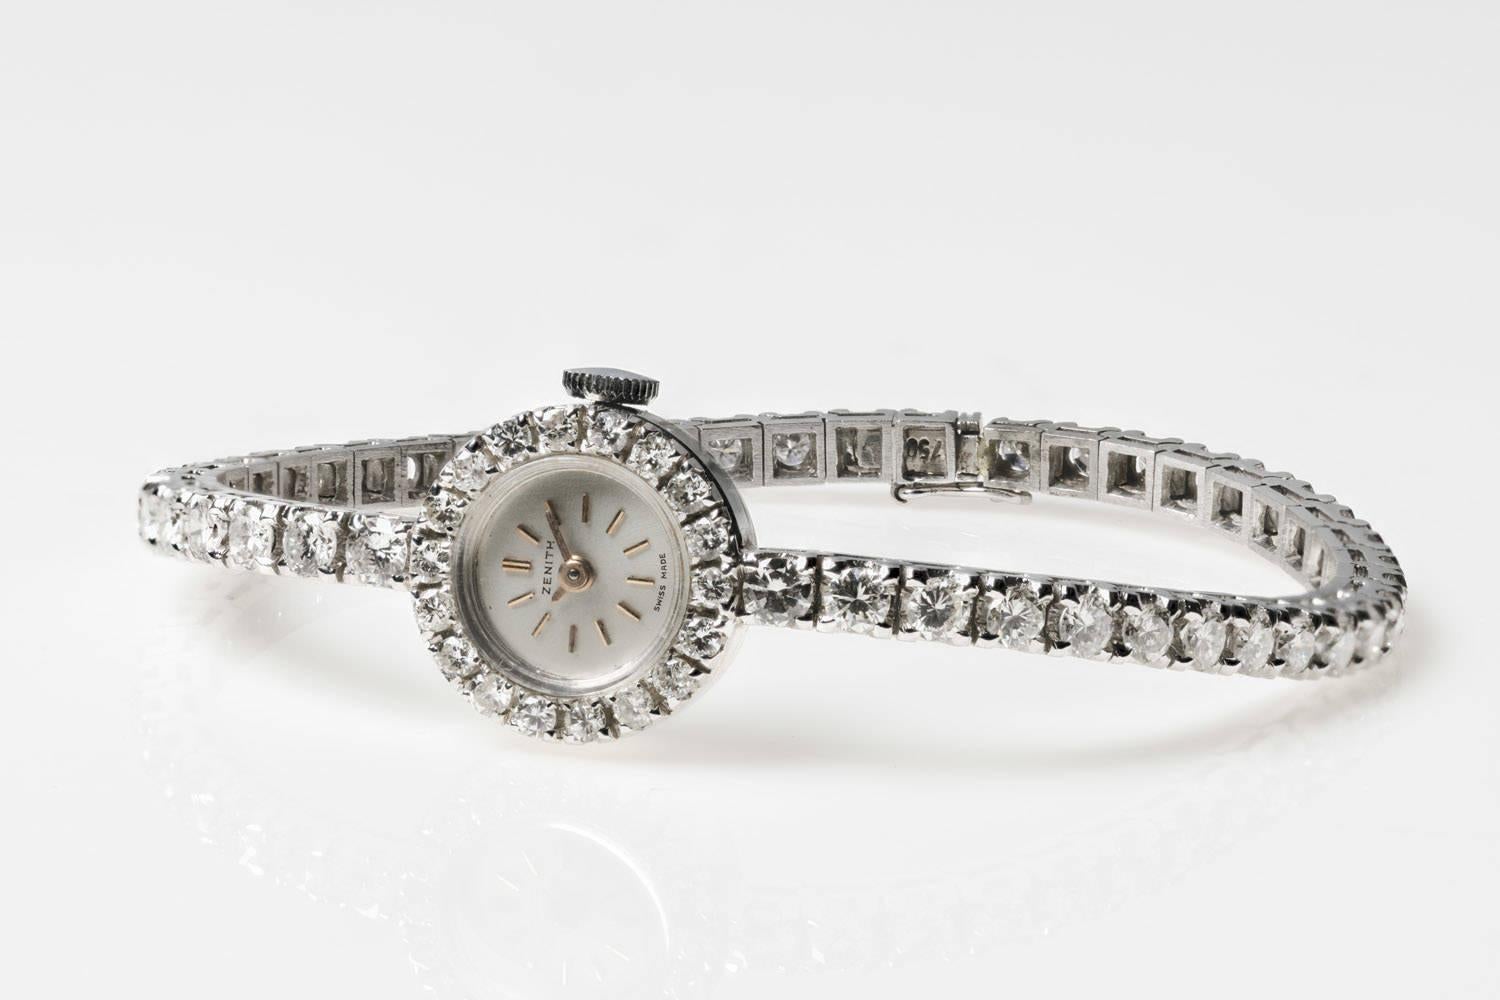 A Lady's Swiss diamond wristwatch, the 1960's vintage cocktail watch with manual Zenith movement, the bracelet and watch bezel fully set with 90 brilliant cut diamonds.
Bezel Diameter: 14.8 mm
Inside Diameter: 6.5 mm
Diamonds Weight 1.80 carat.